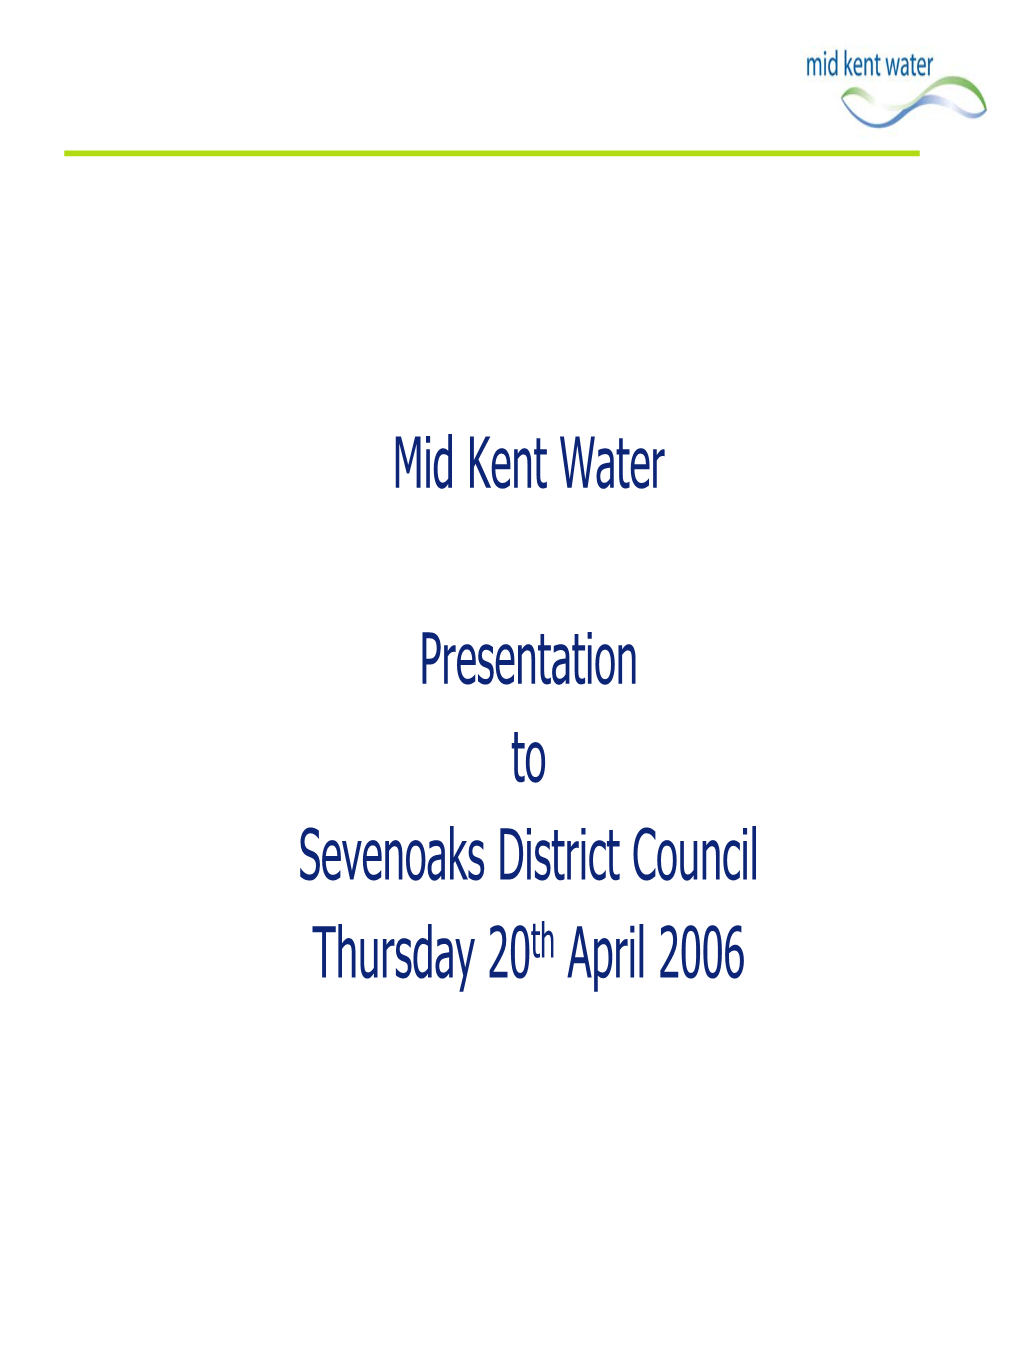 Mid Kent Water Presentation to Sevenoaks District Council